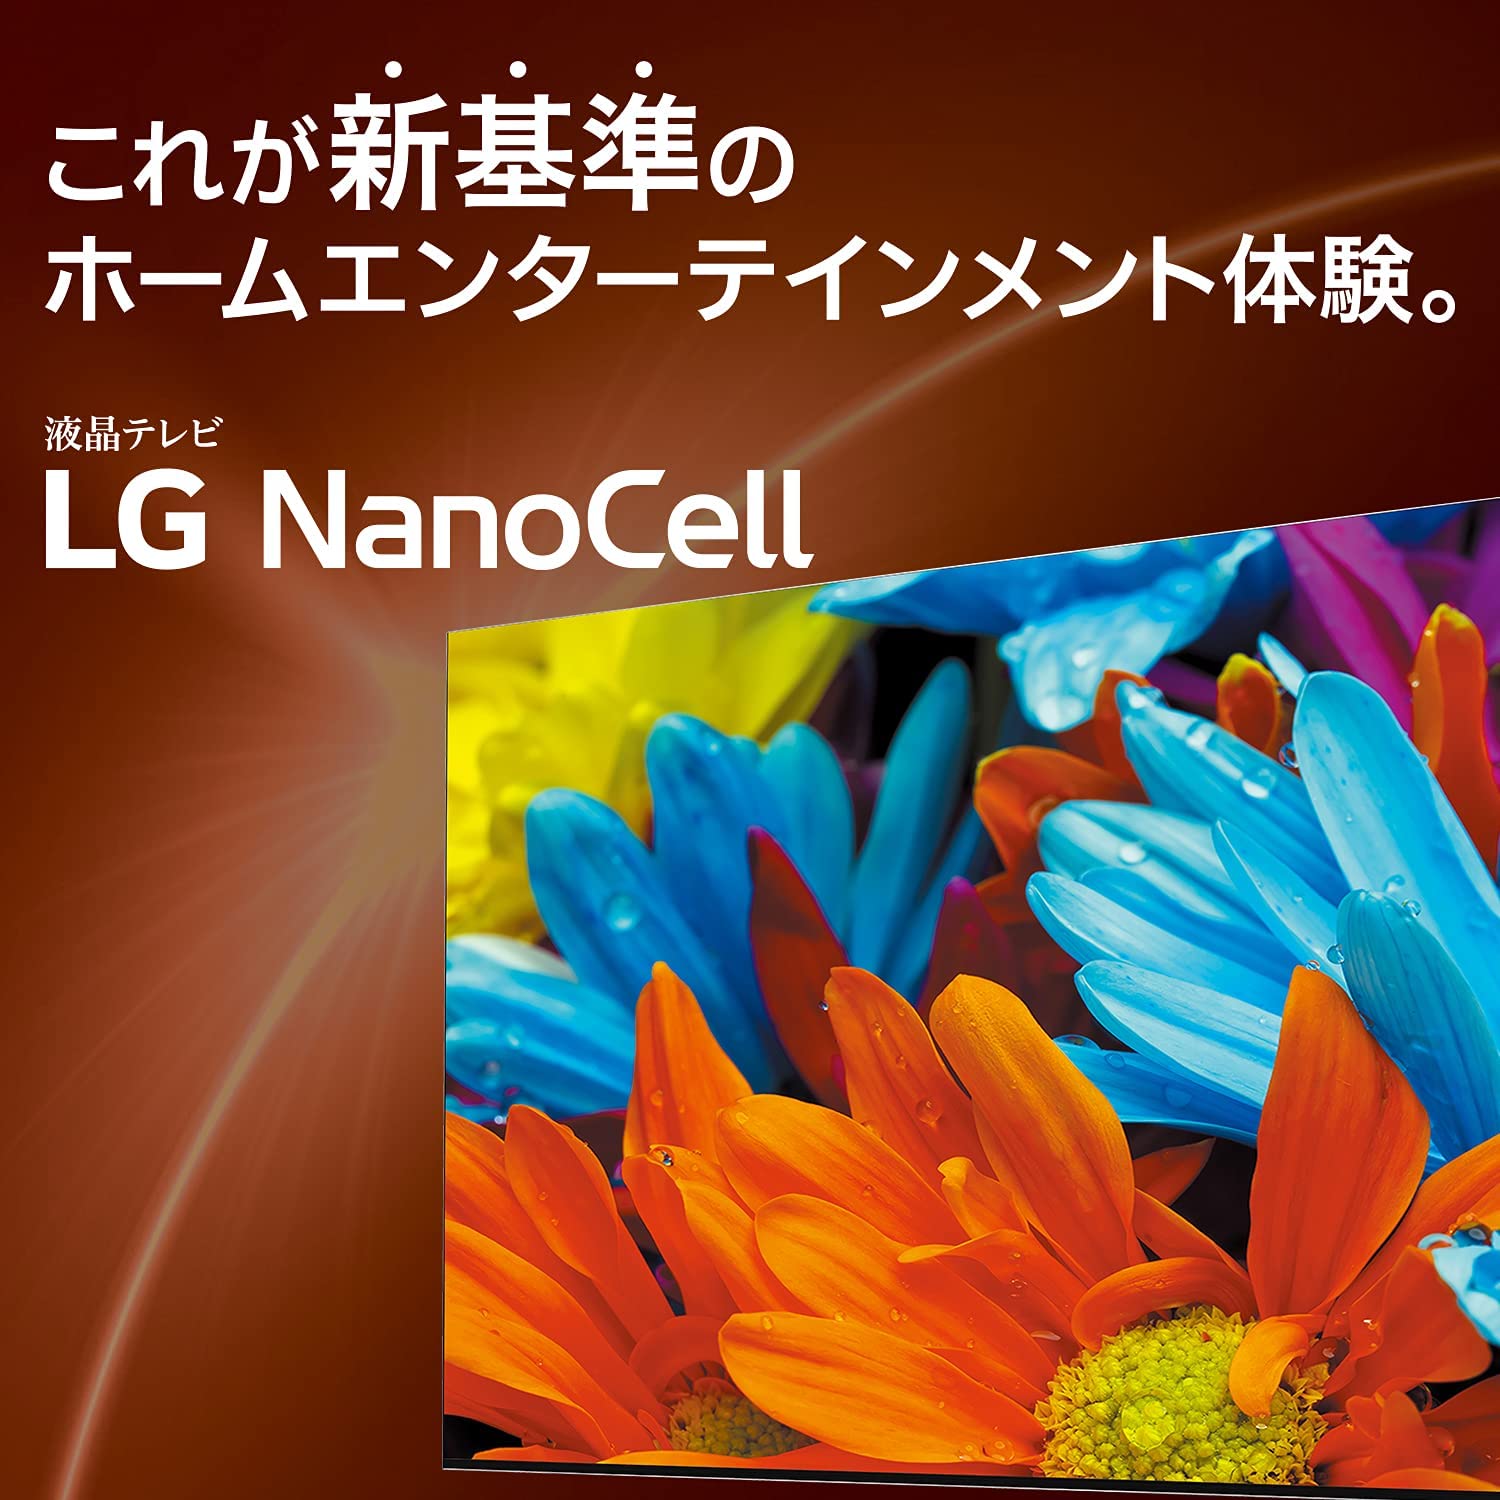 Exclusive for Member Prime >> LG 43-inch LCD TV 4K – Tokyo